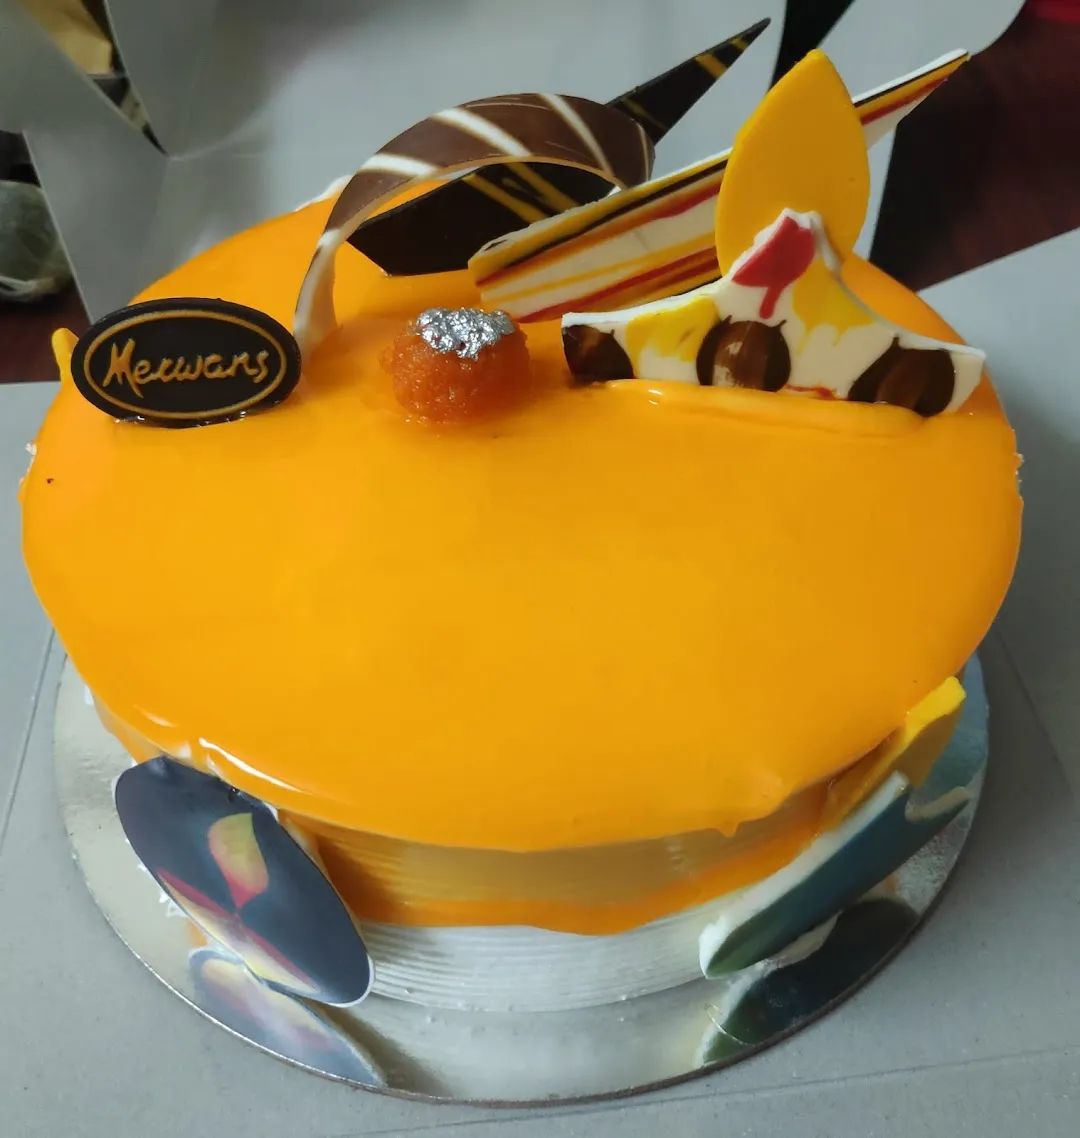 Merwans Cake Stop, Byculla order online - Zomato